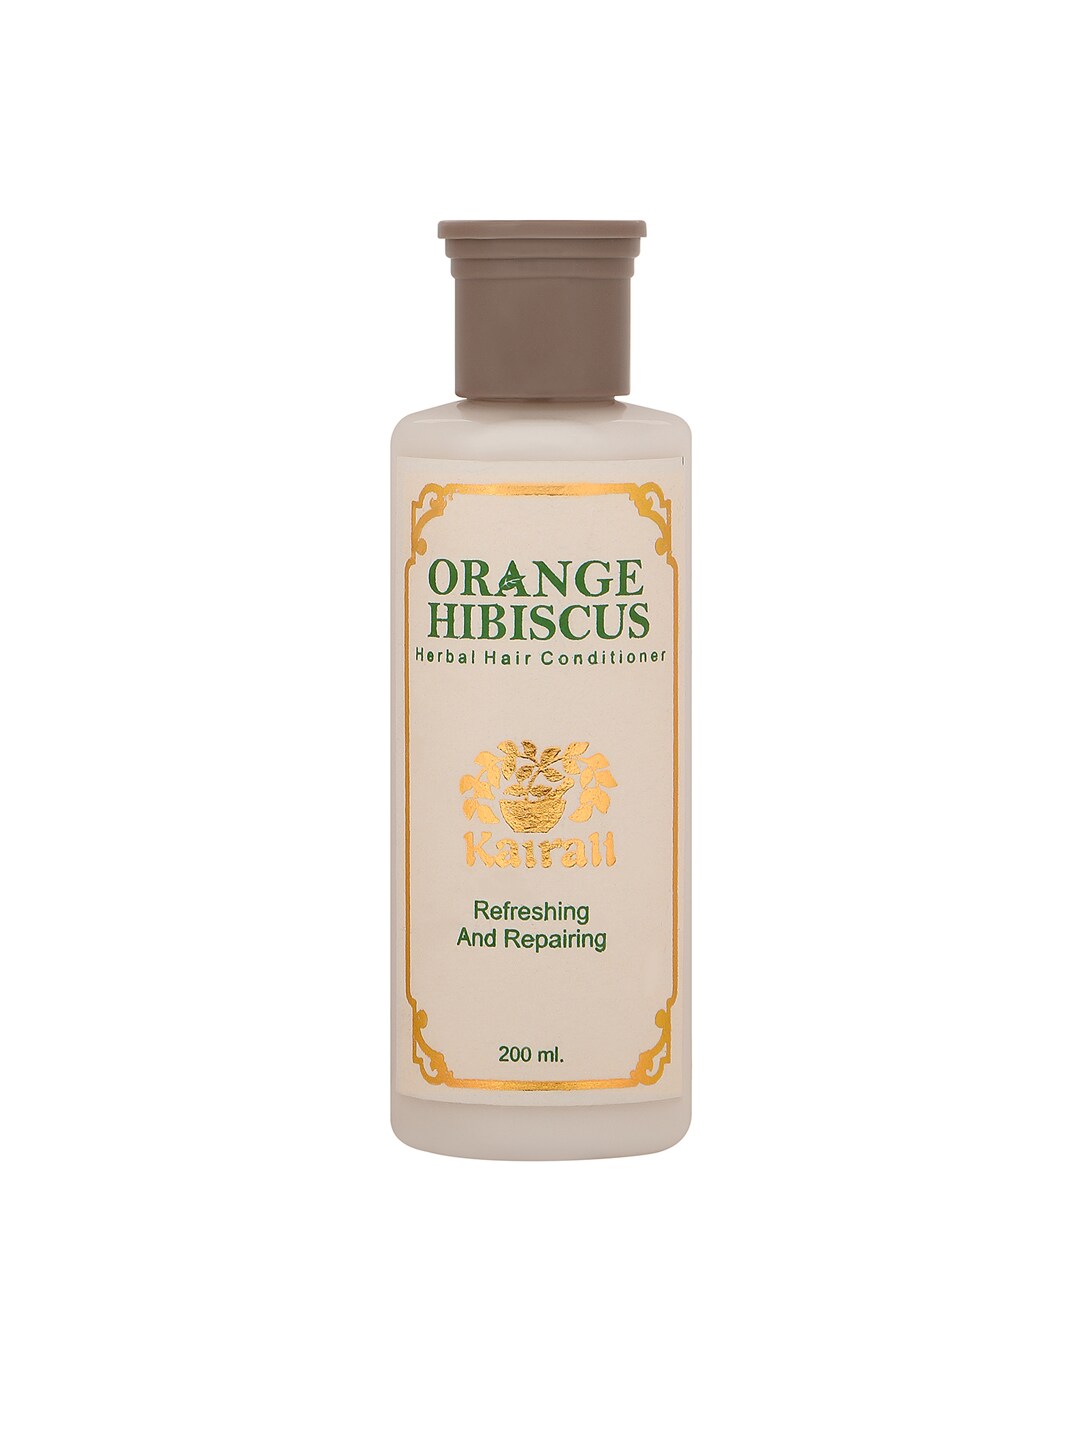 Kairali Orange Hibiscus Herbal Hair Conditioner 200ml Price in India